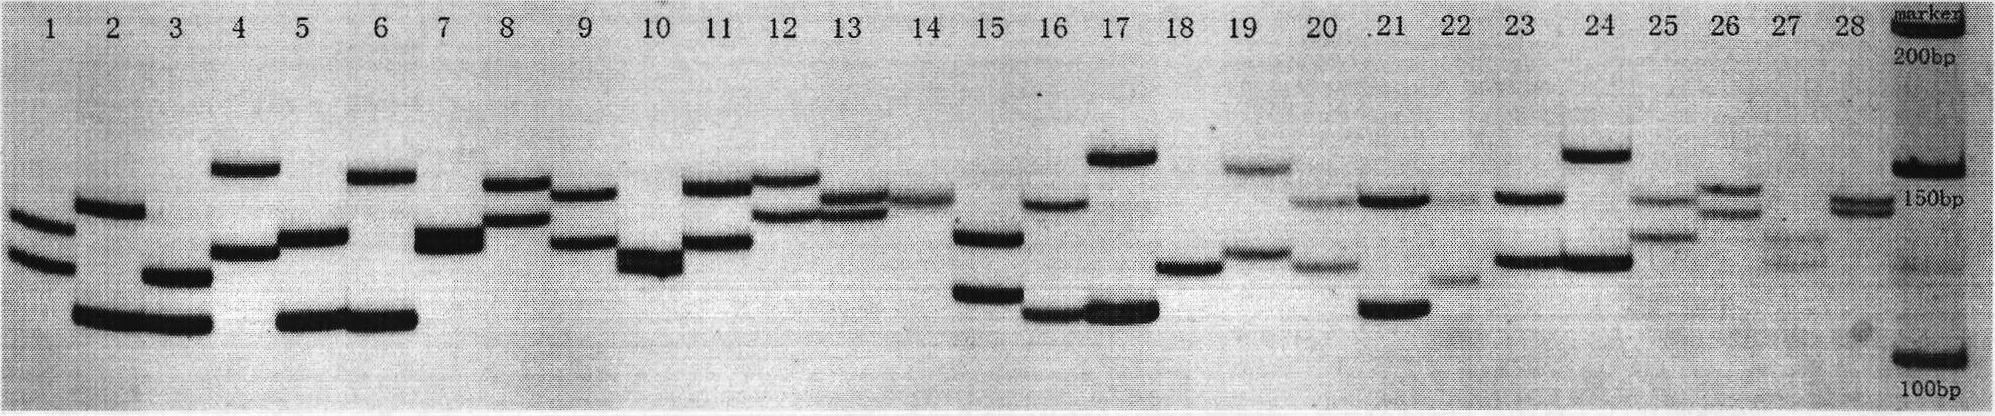 Method for detecting Jassr131 microsatellite deoxyribonucleic acid (DNA) marker of Charybdis japonica